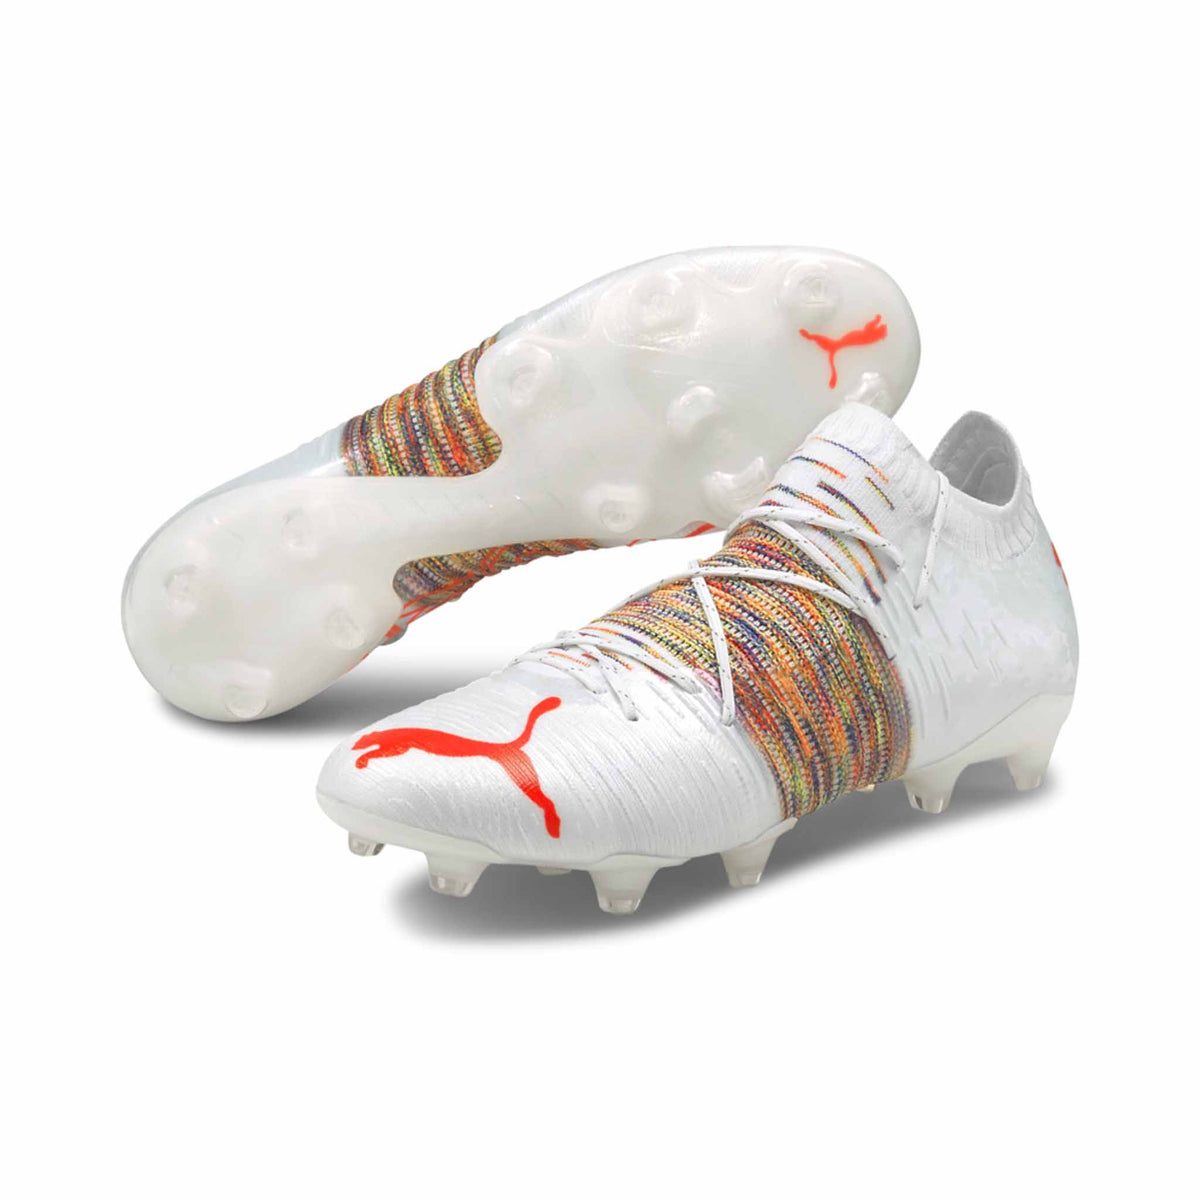 Puma Future Z 1.1 FG chaussures de soccer à crampons Puma White/Red Blast paire